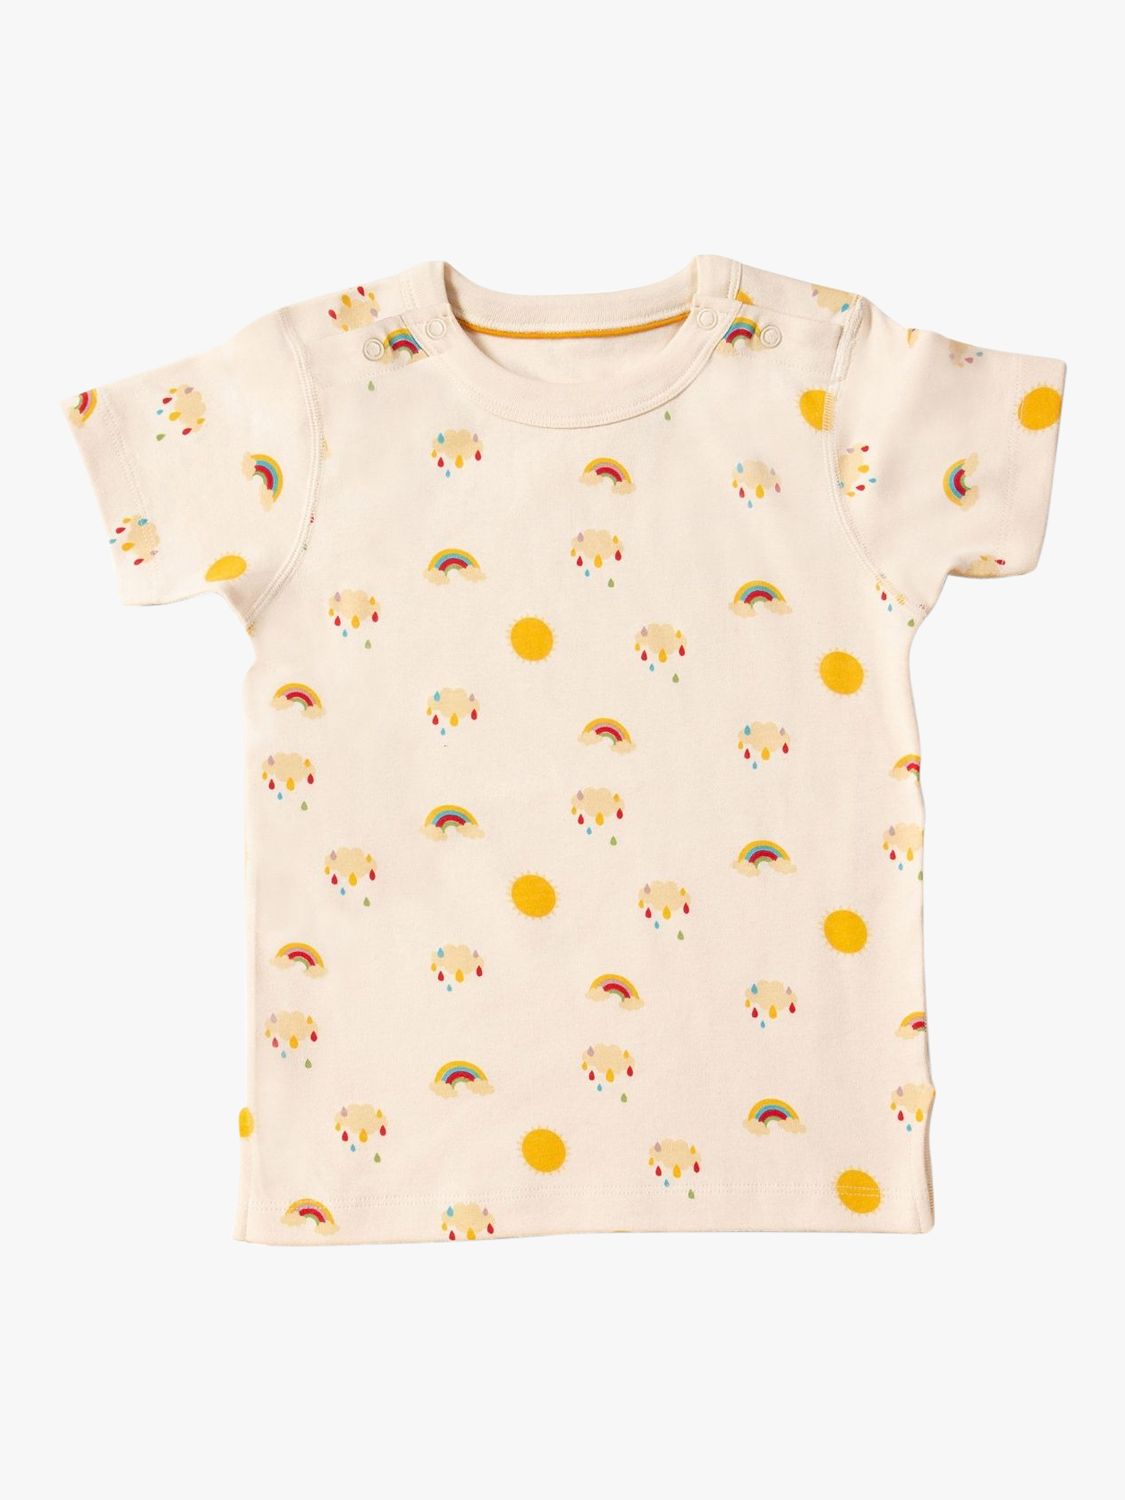 Little Green Radicals Kids' Adaptive Organic Cotton Sunshine & Rainbow Print T-Shirt, Cream, 18-24 months